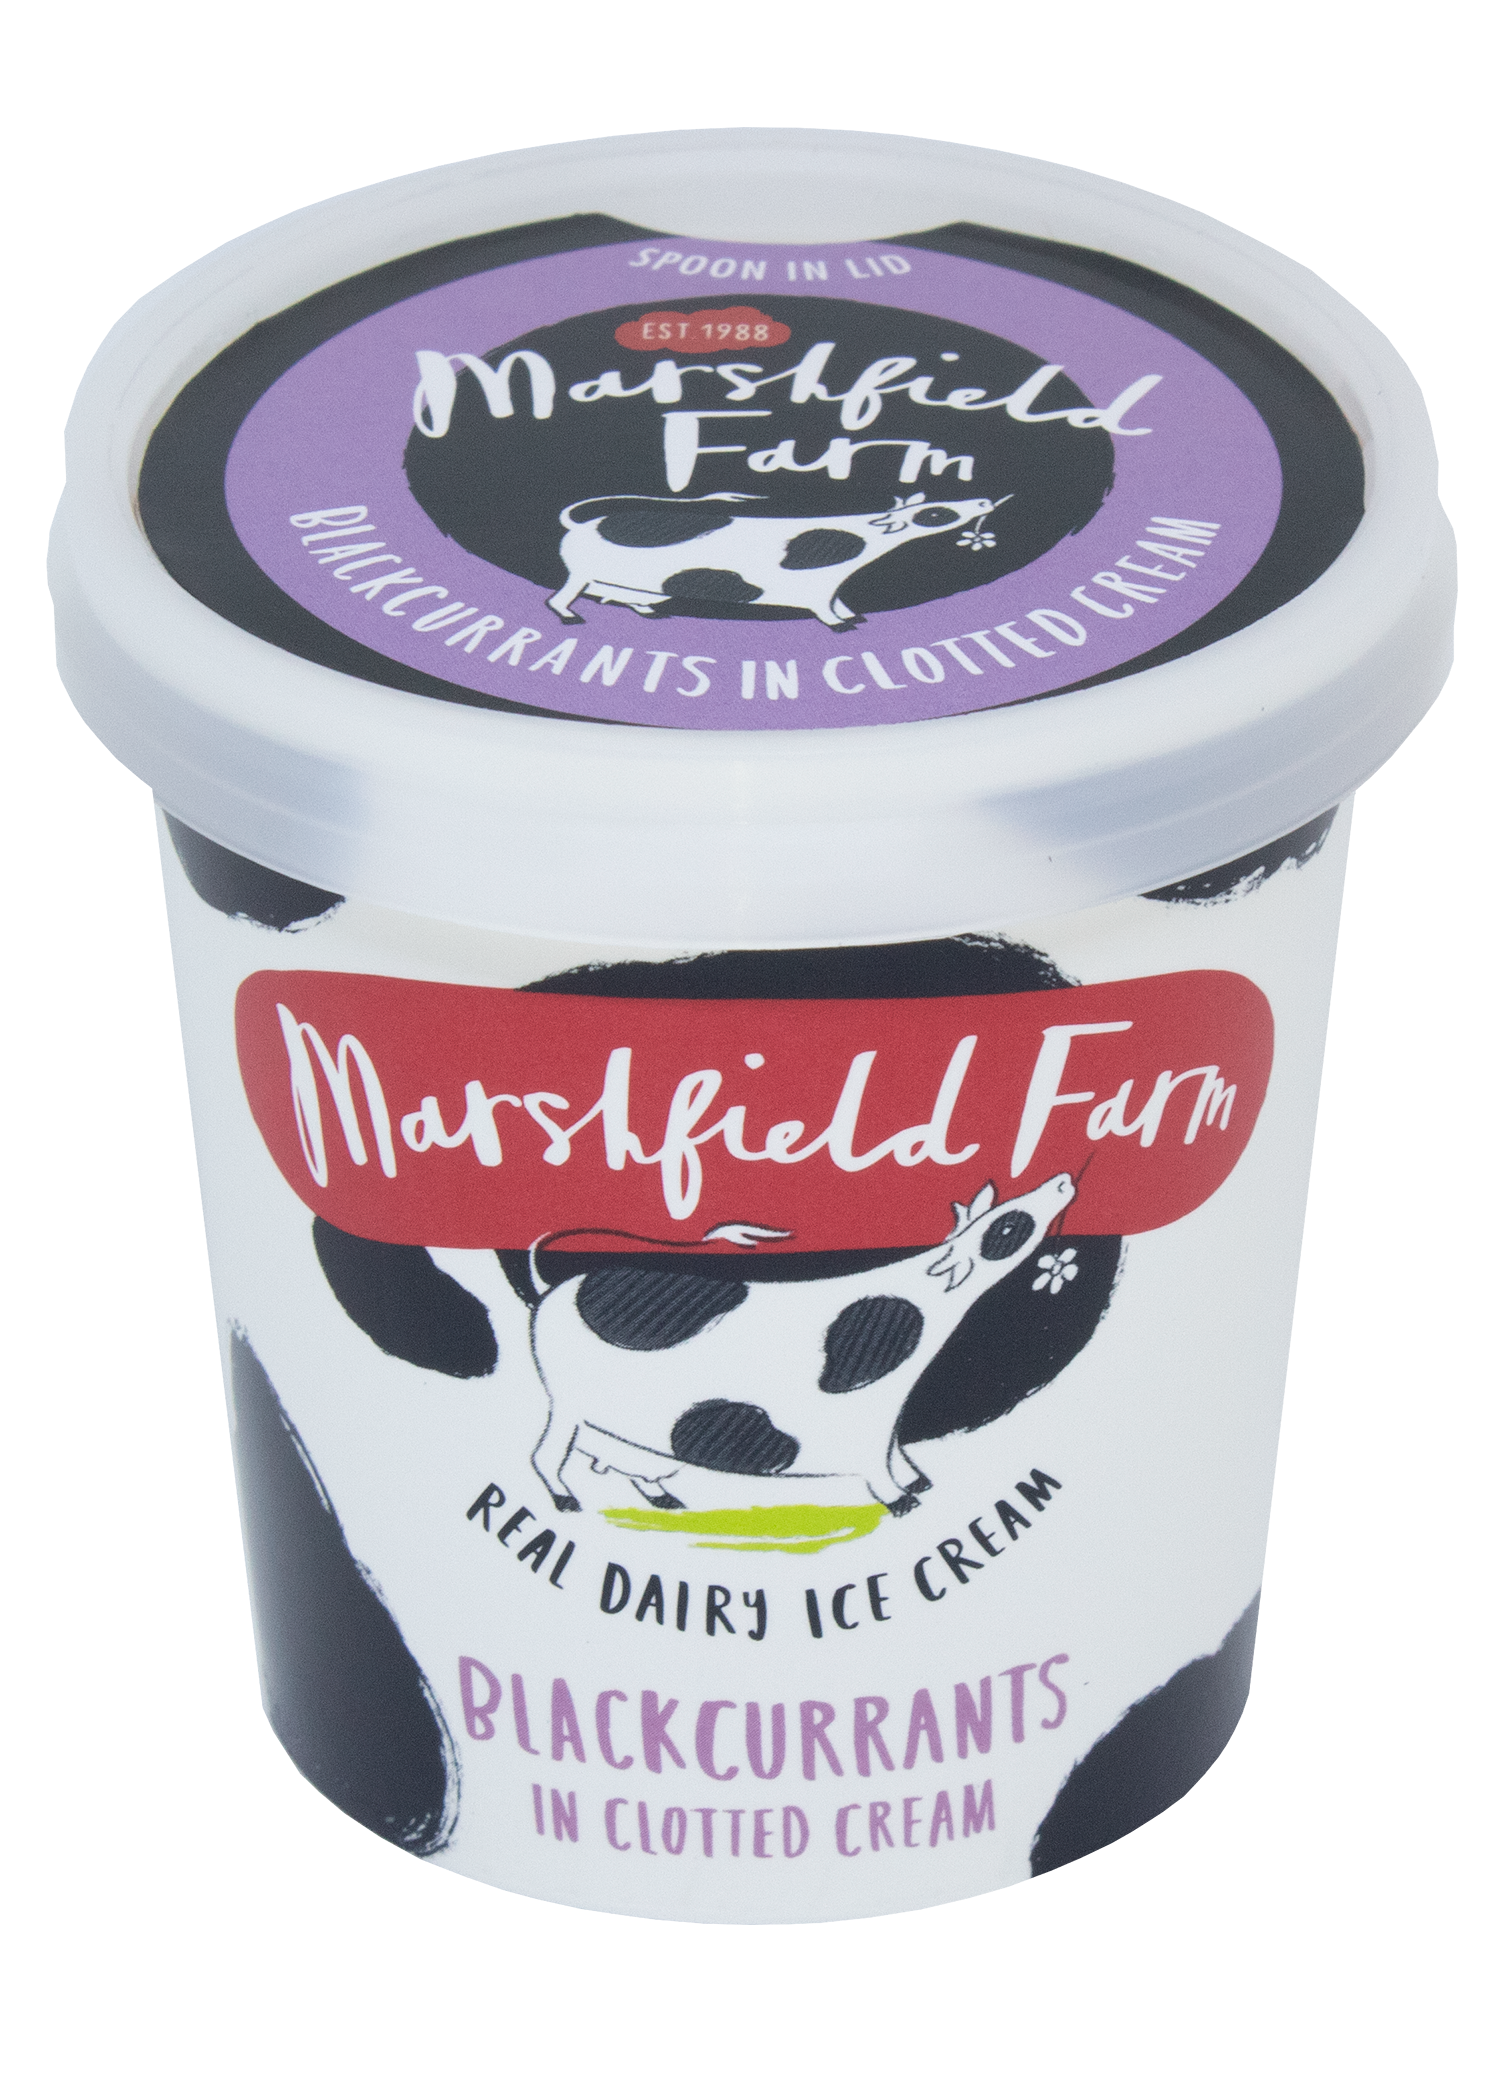 Marshfield Farm Ice Cream 125ml Blackcurrants in Clotted Cream